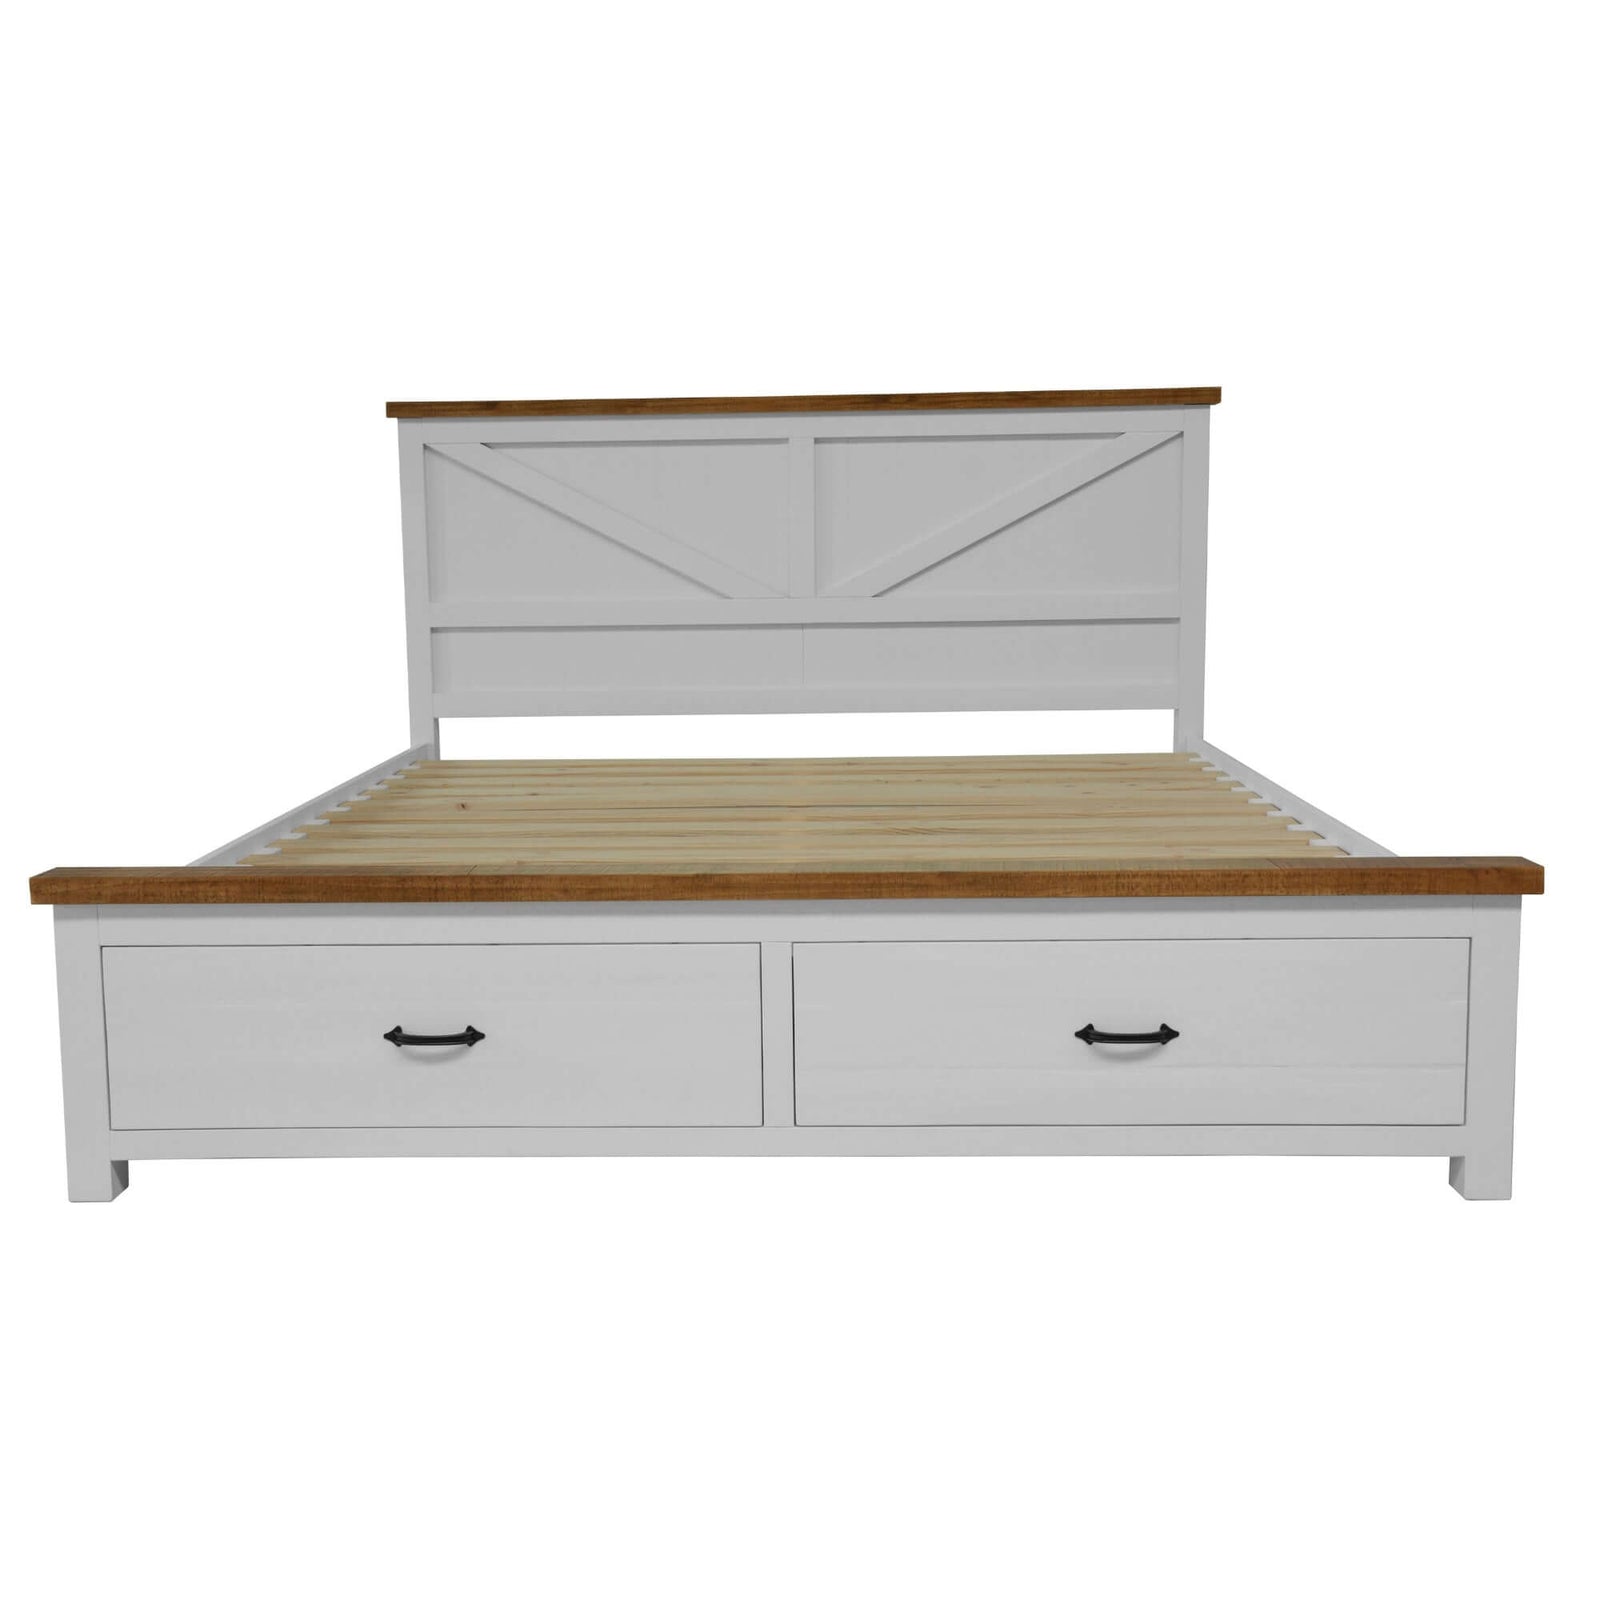 Grandy Bed Frame King Size Timber Mattress Base With Storage Drawers White Brown-Upinteriors